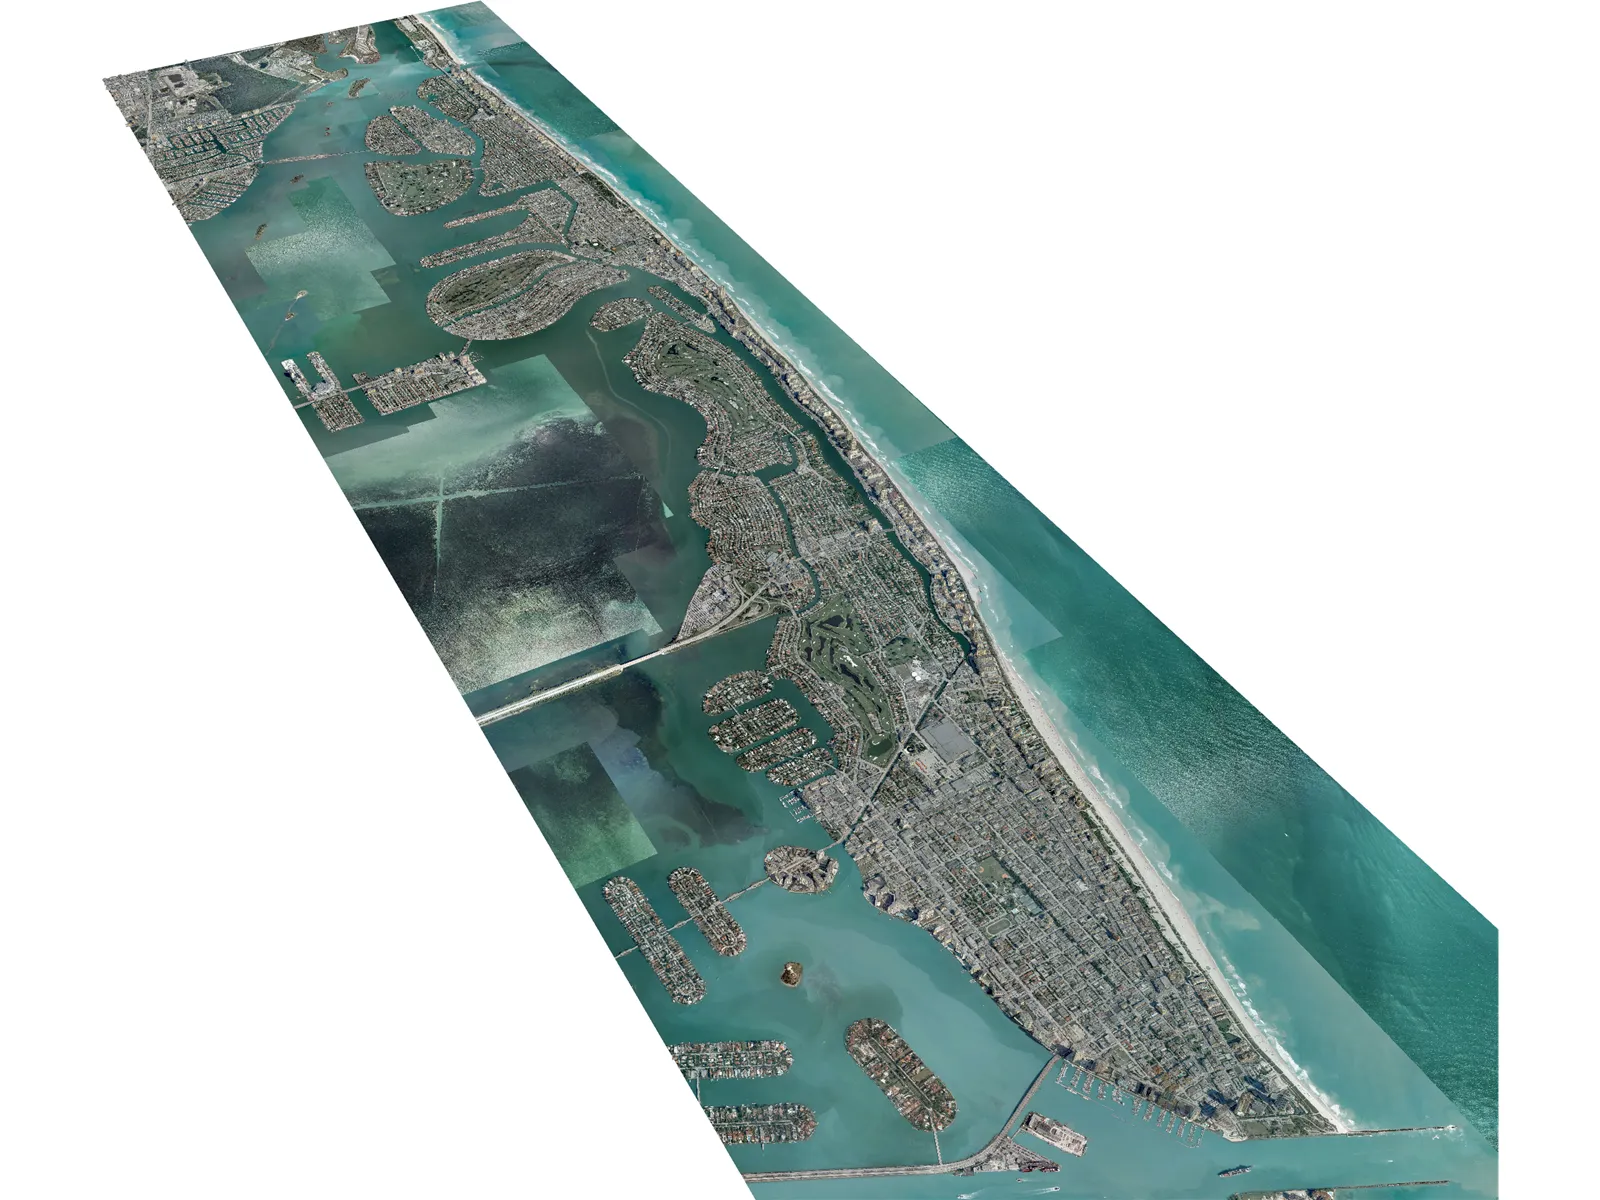 Miami Beach 3D Model